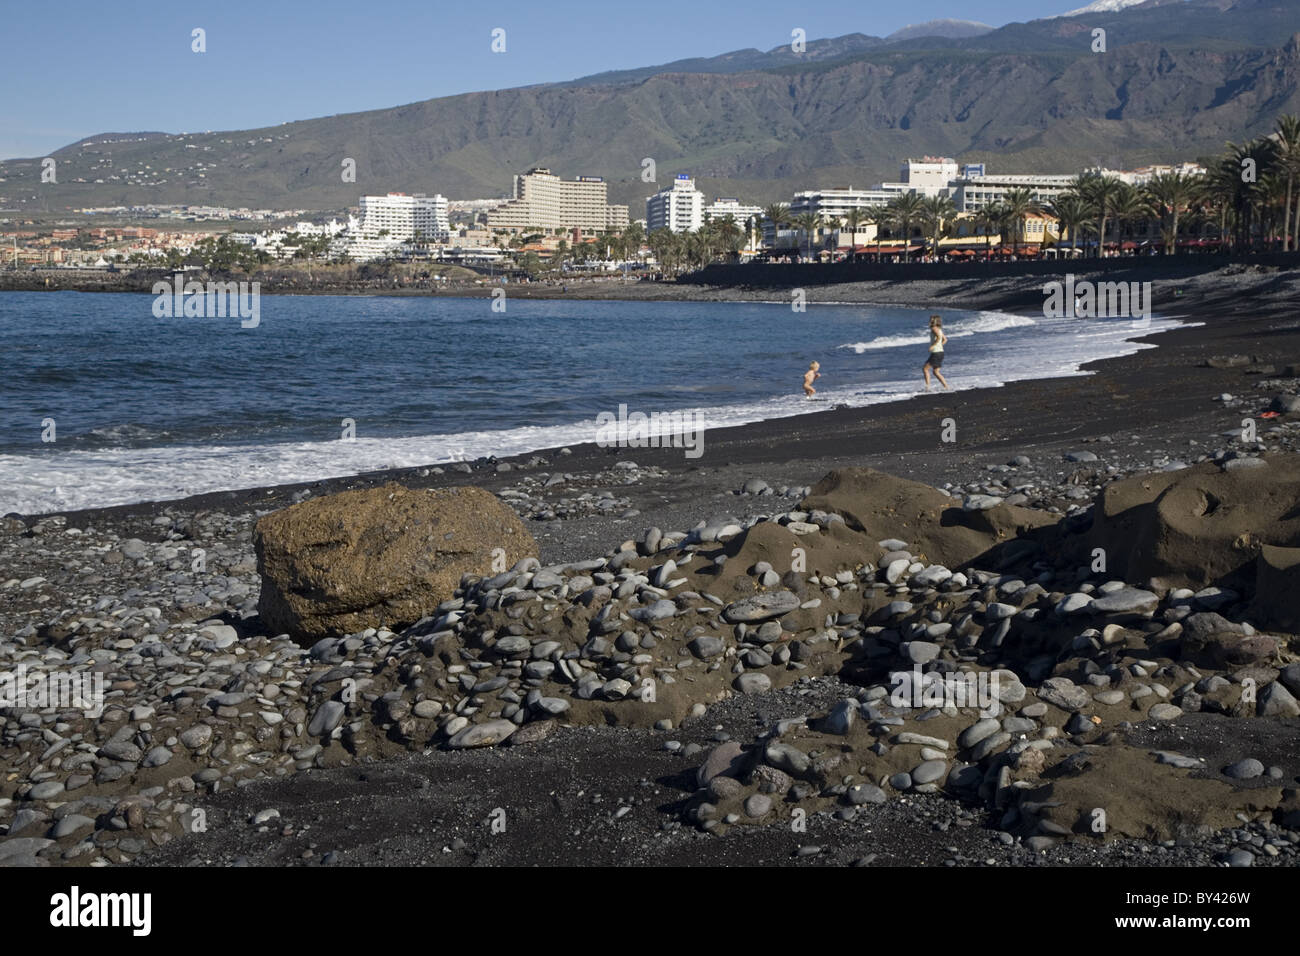 Plage noire le long de la promenade de Playa de las Americas, Tenerife, Canaries, Espagne Banque D'Images